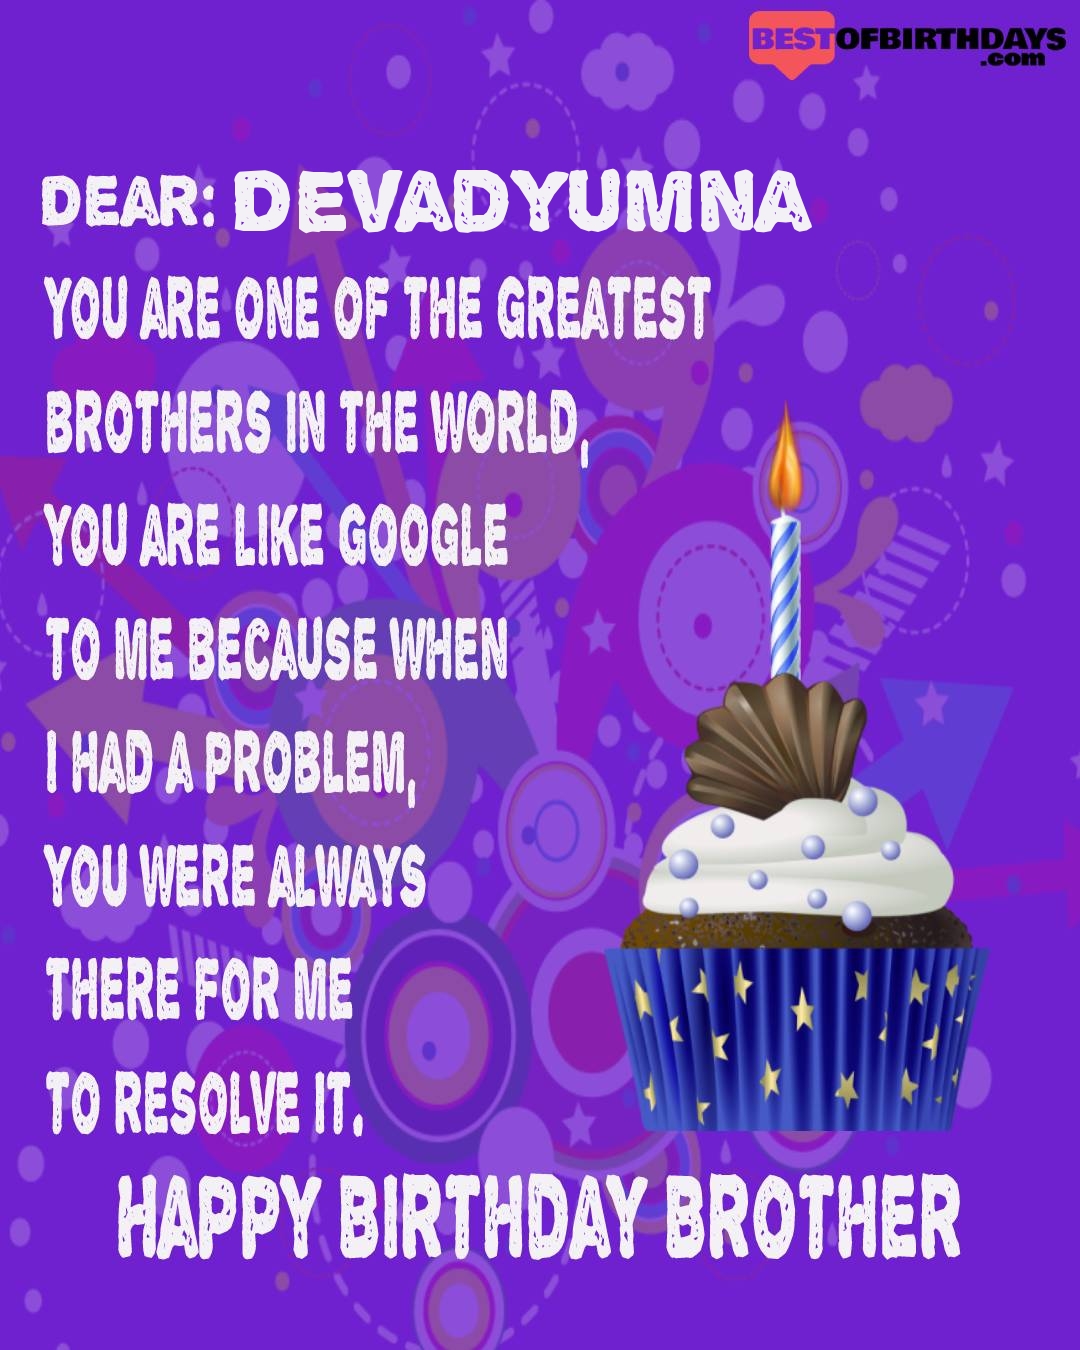 Happy birthday devadyumna bhai brother bro